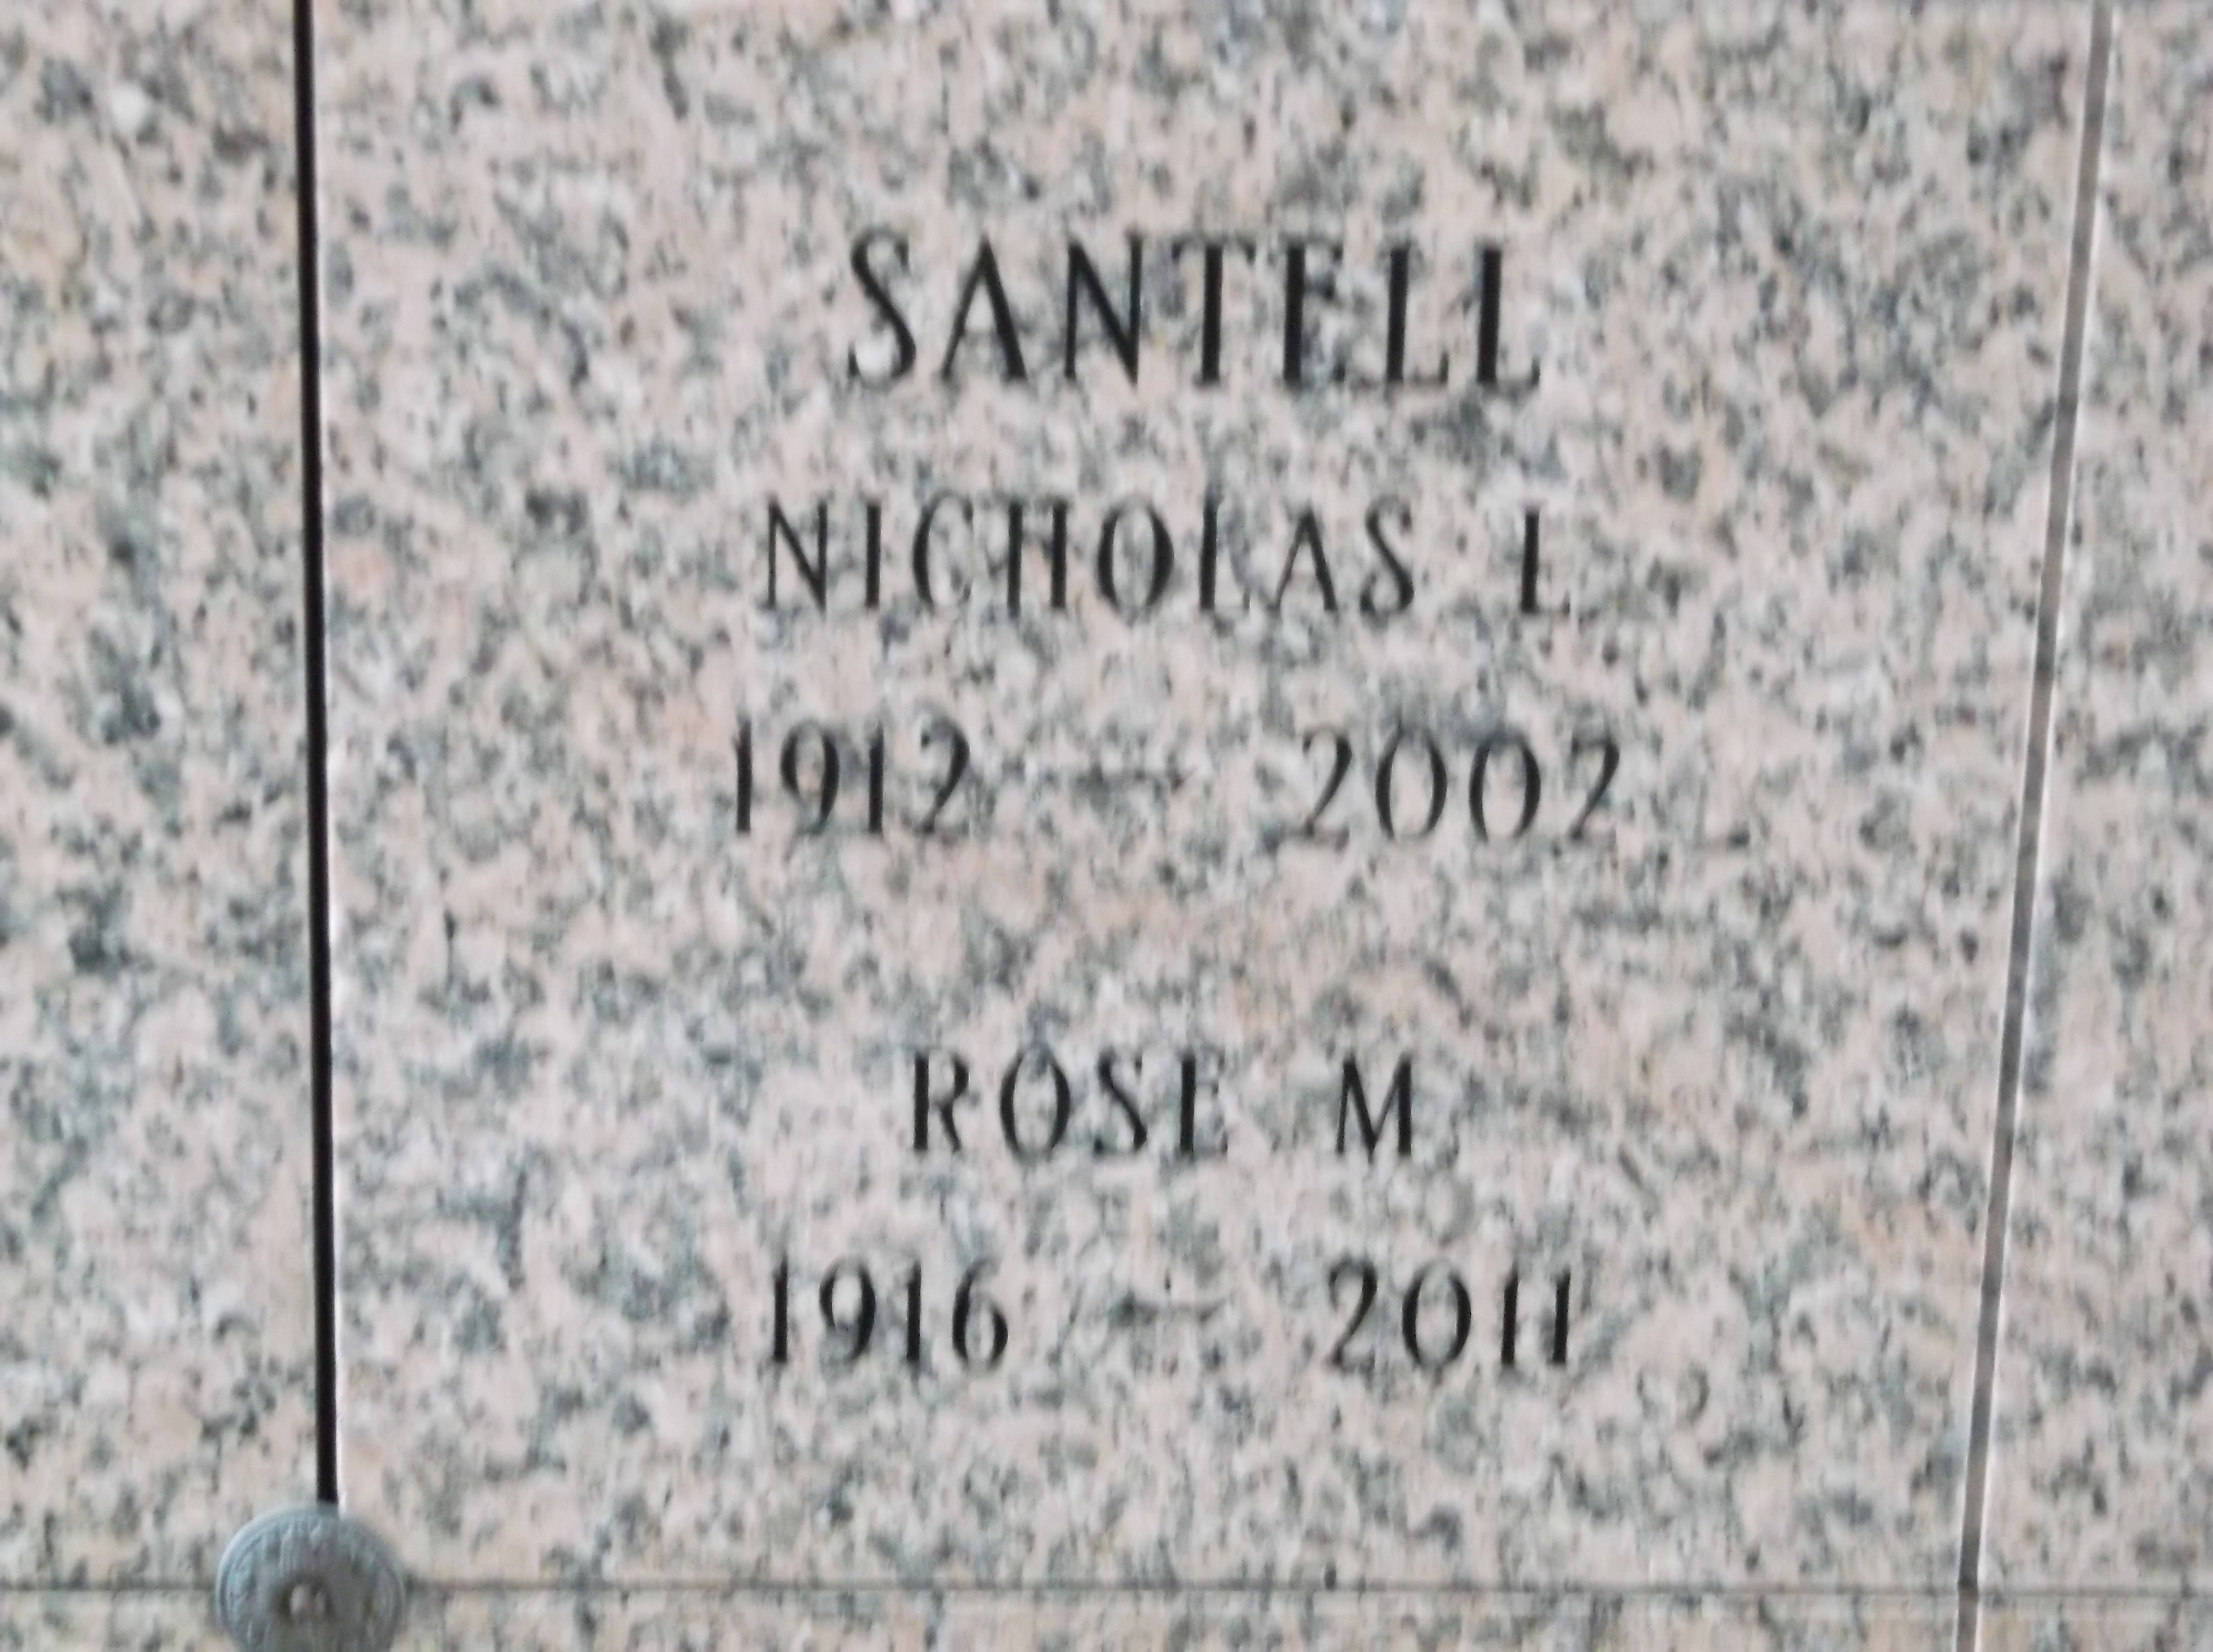 Rose M Santell